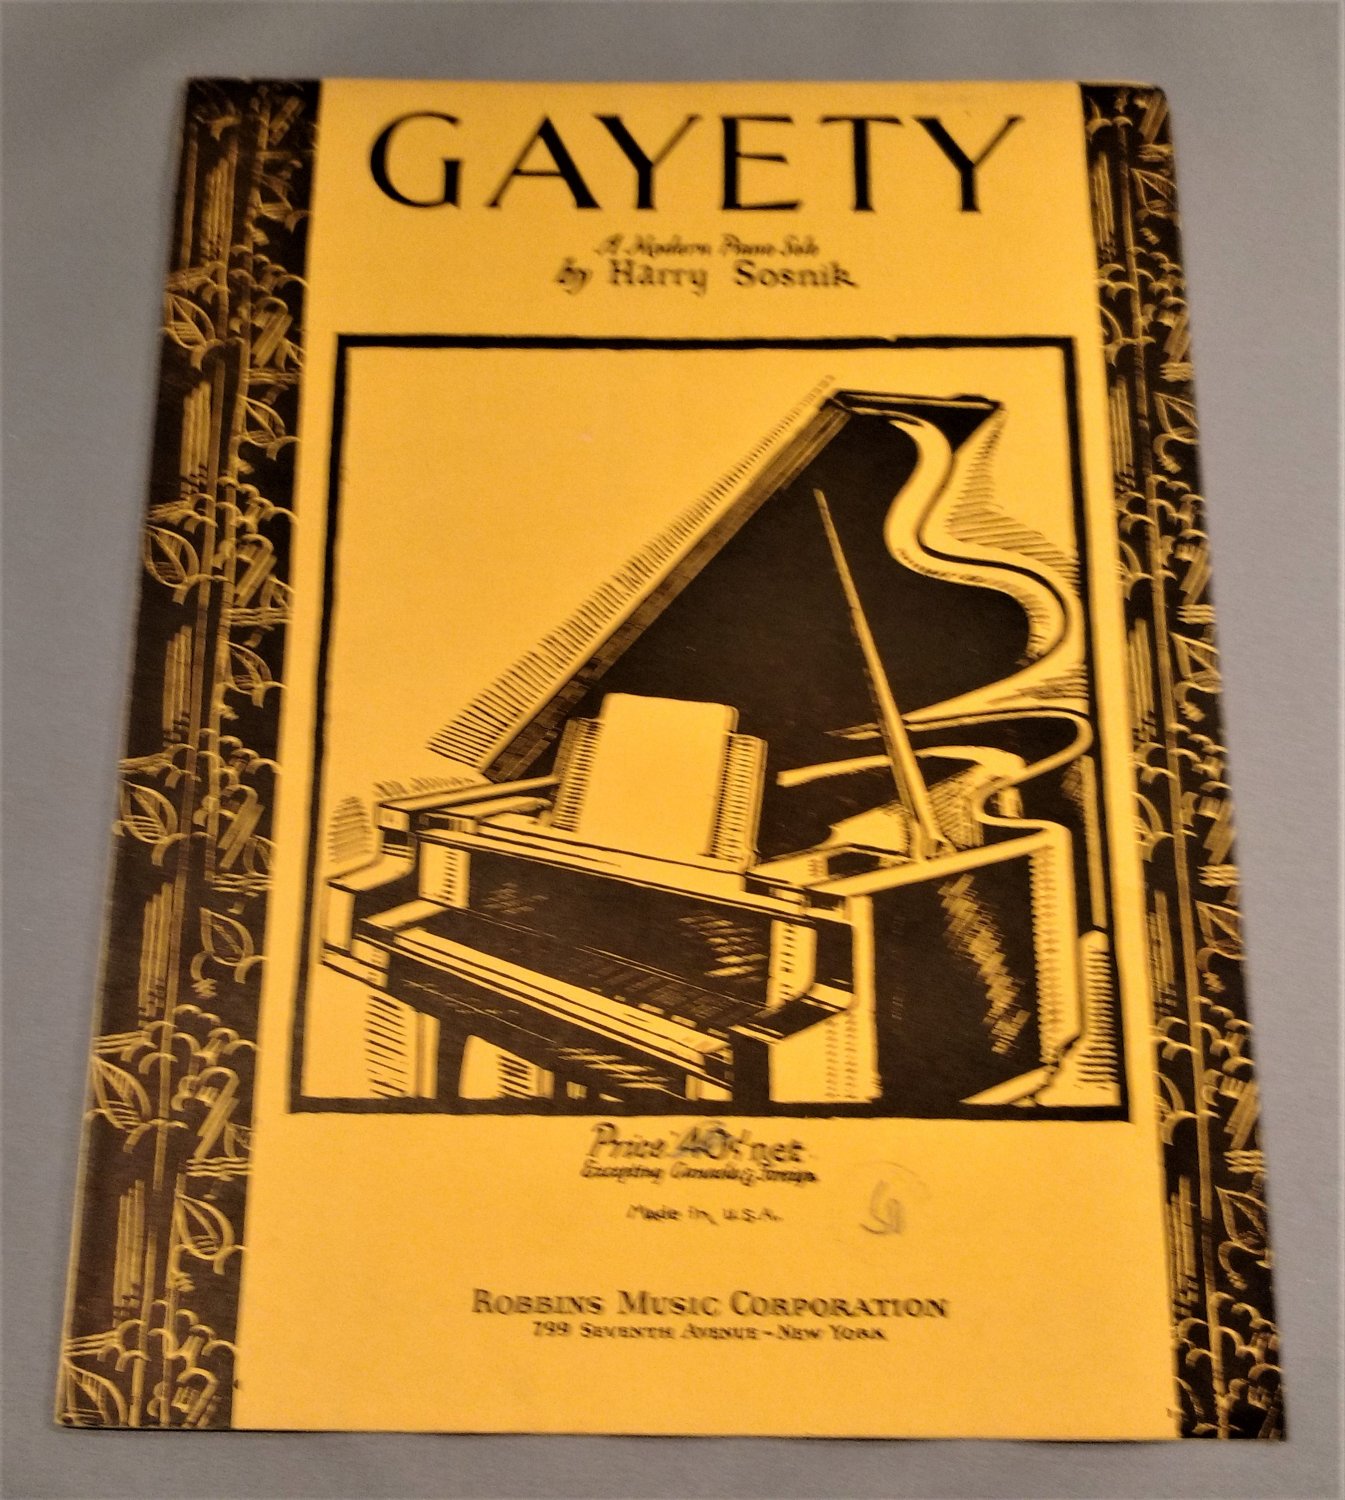 GAYETY Piano Solo Sheet Music by Harry Sosnik and D. Savino Â© 1935